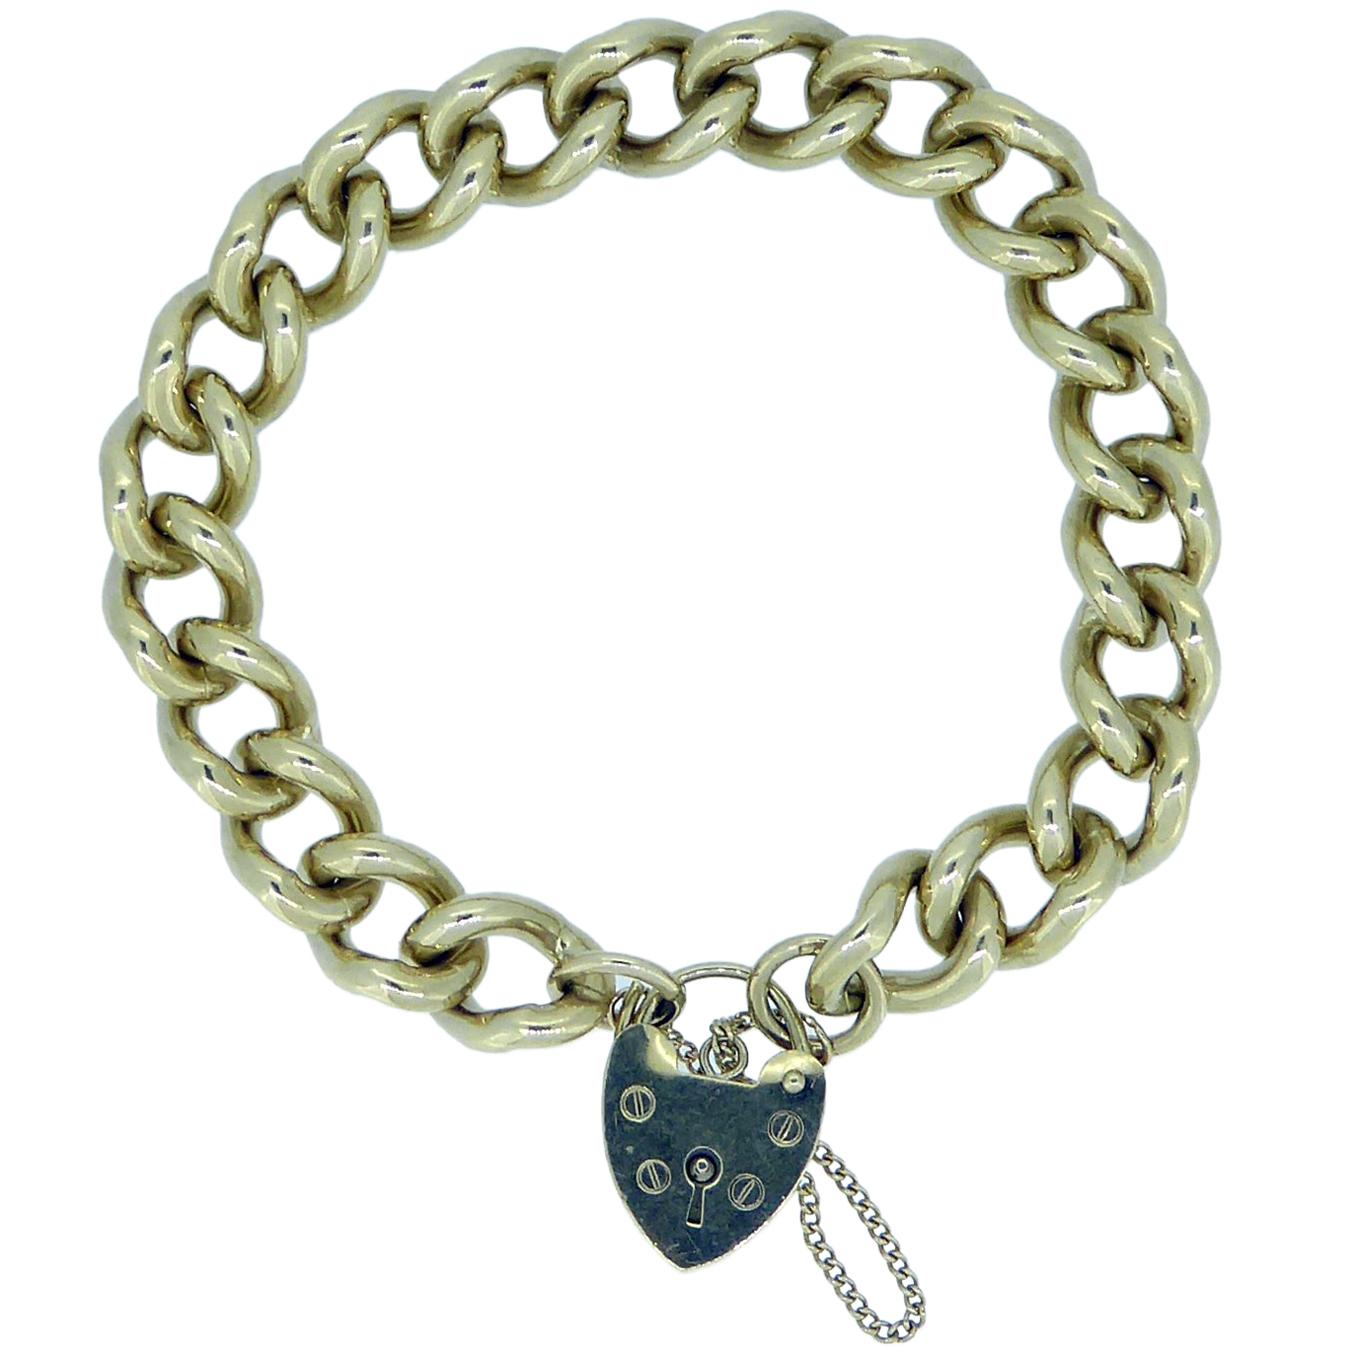 Woman's or Men's Vintage Gold Curb Link Bracelet, Padlock Closure, Yellow Gold